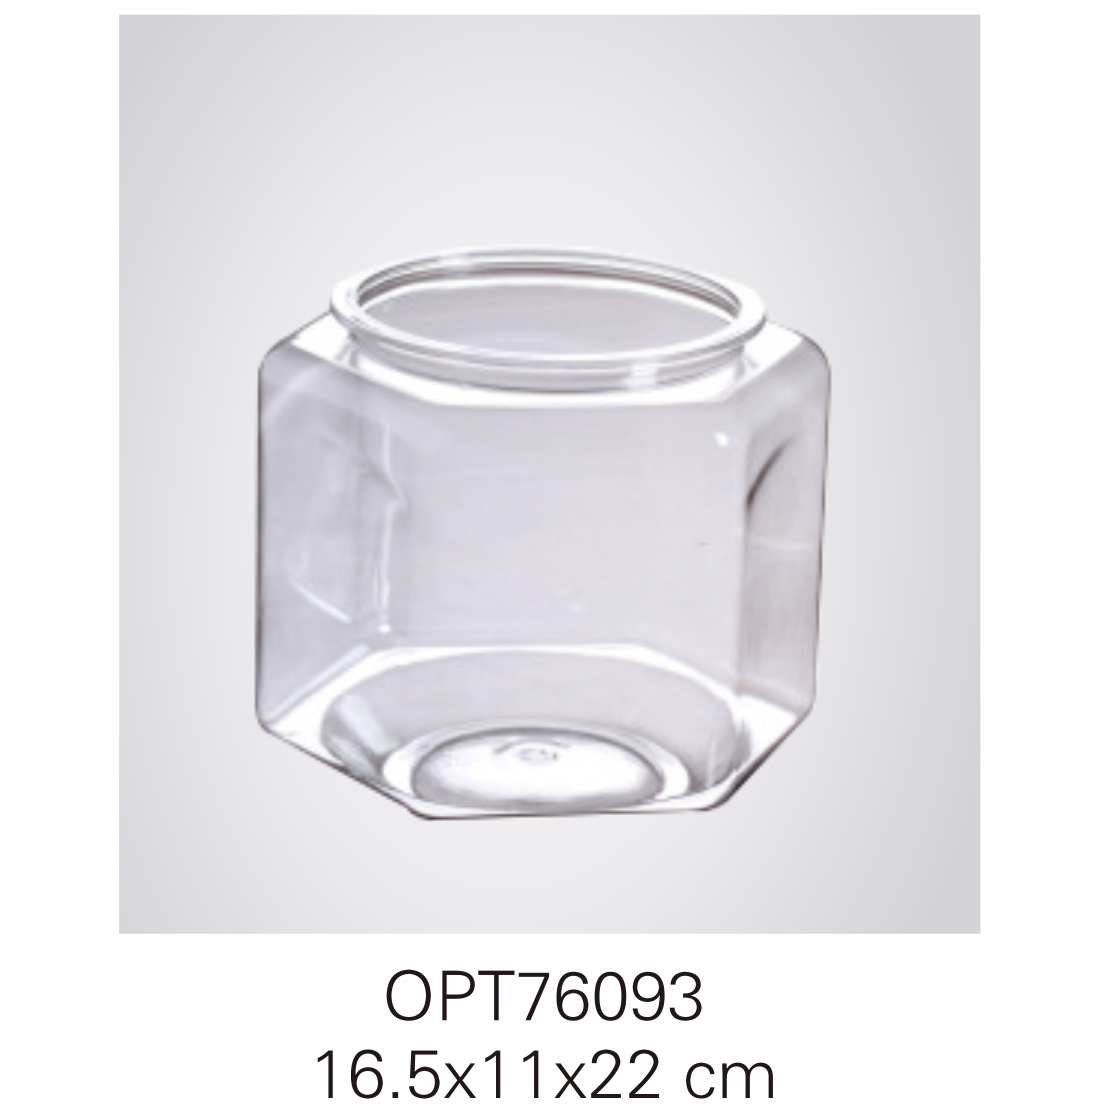 OPT76093 16.5x11x22cm fishbowls